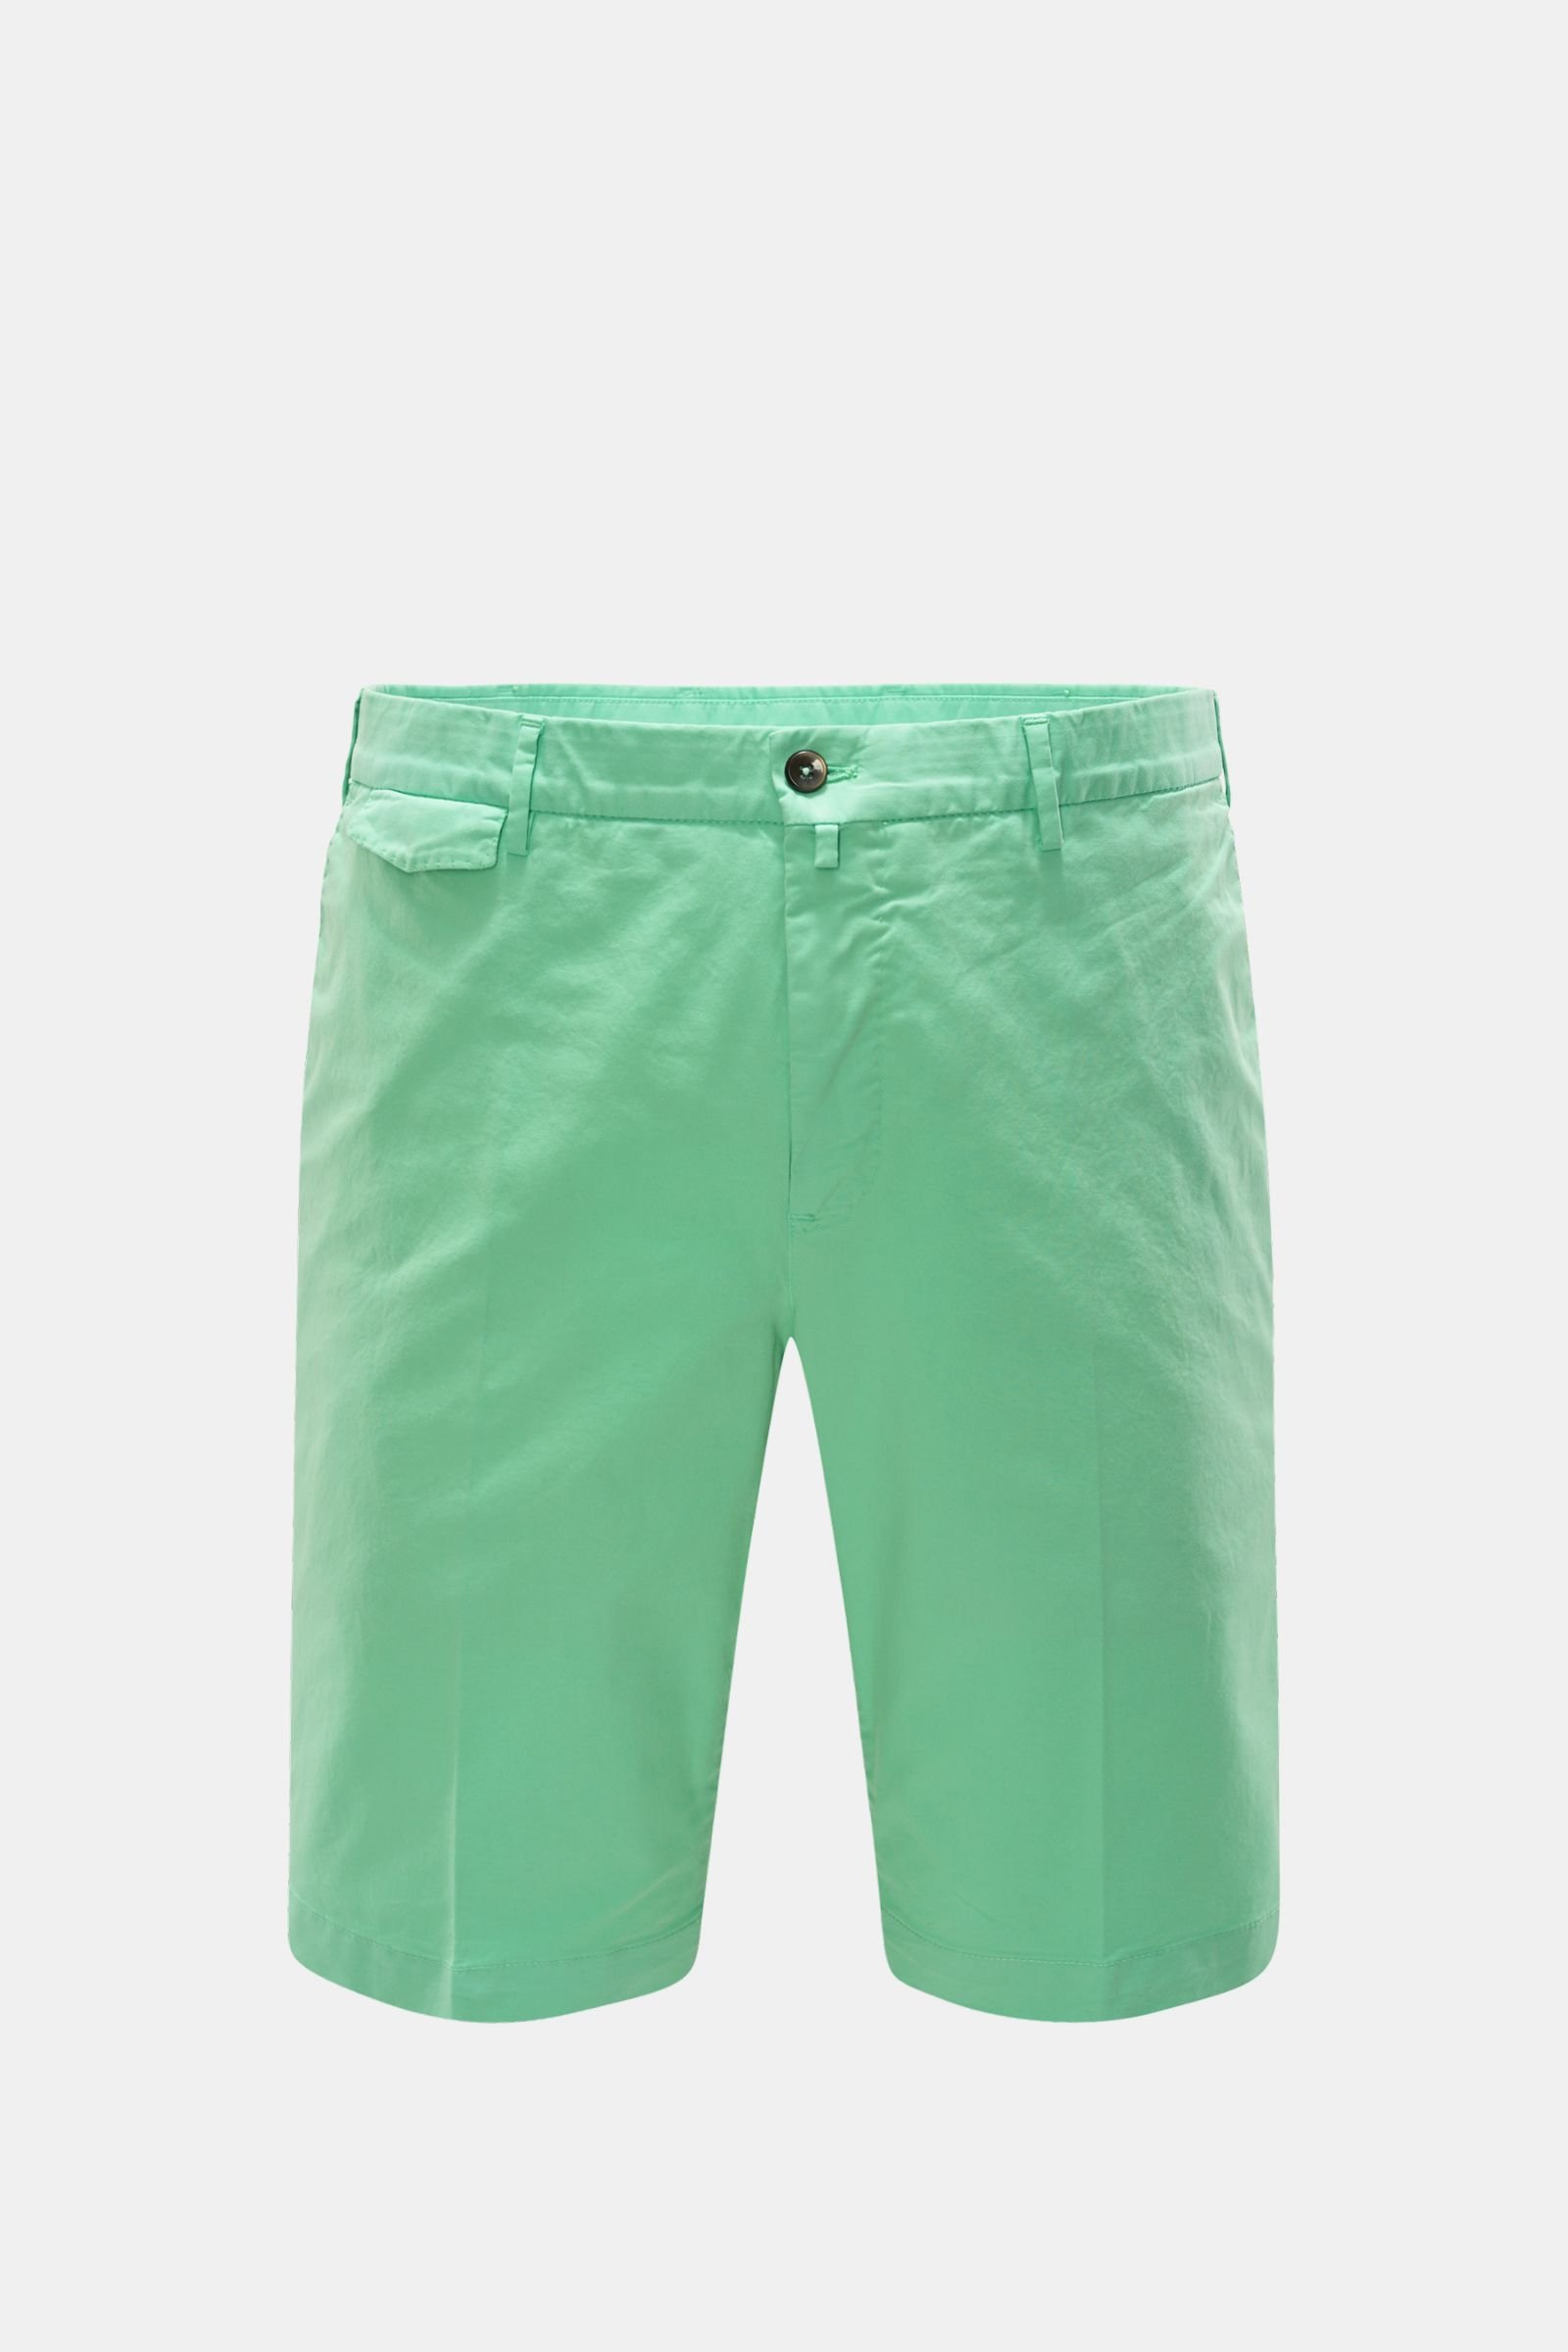 Bermuda shorts mint green